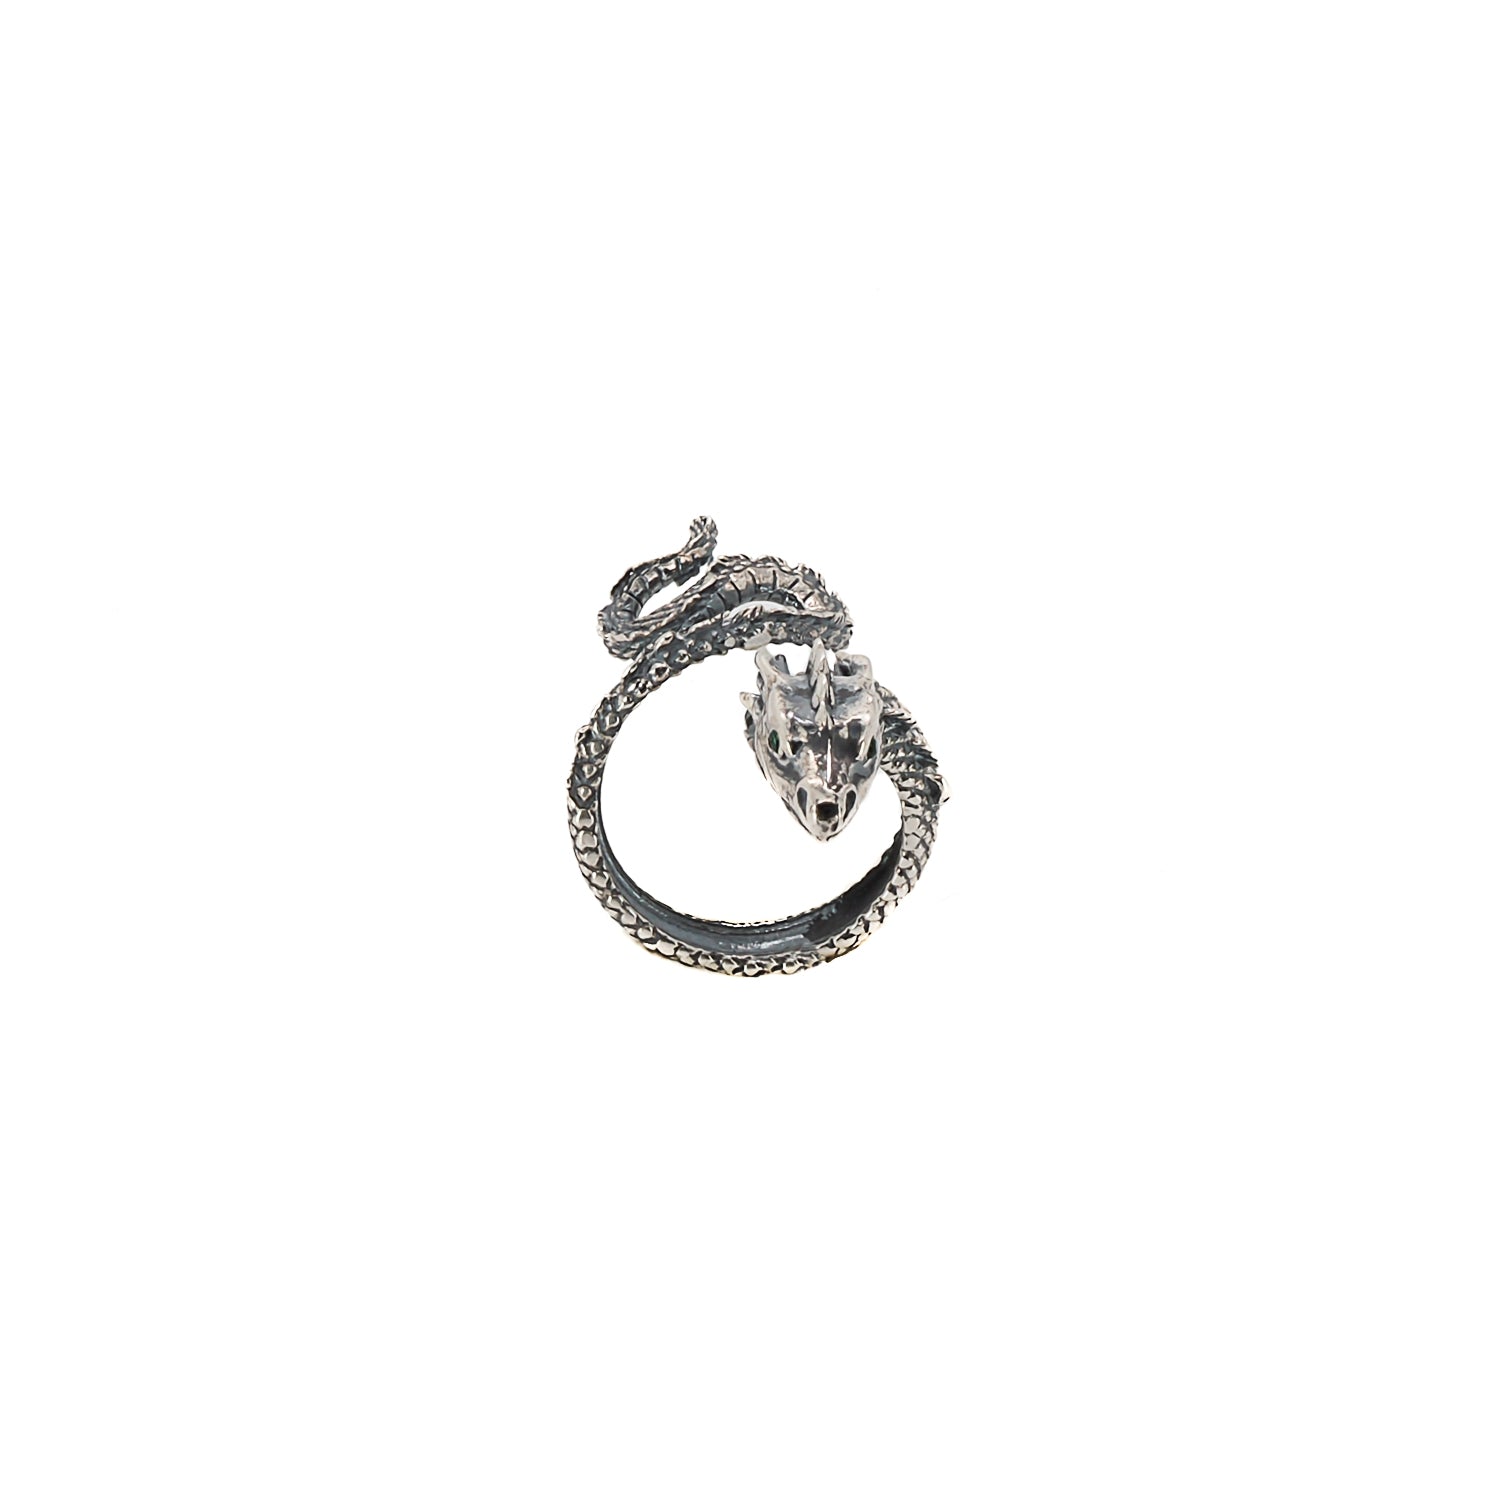 Sterling Silver Snake Ring with Emerald Eyes - Elegant Design